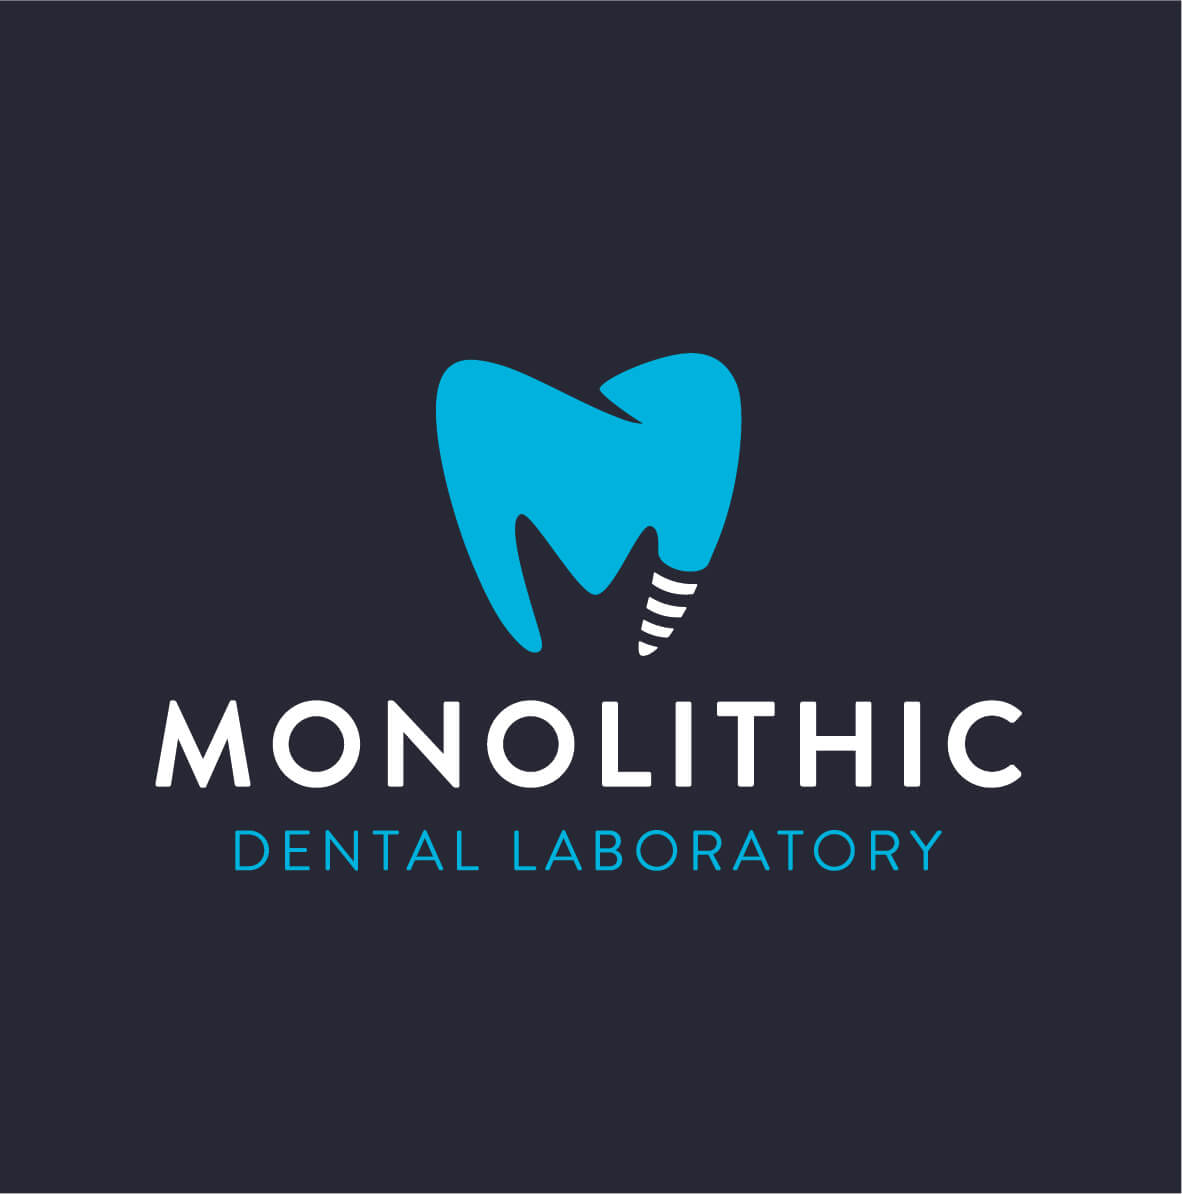 Monolithic Dental Laboratory